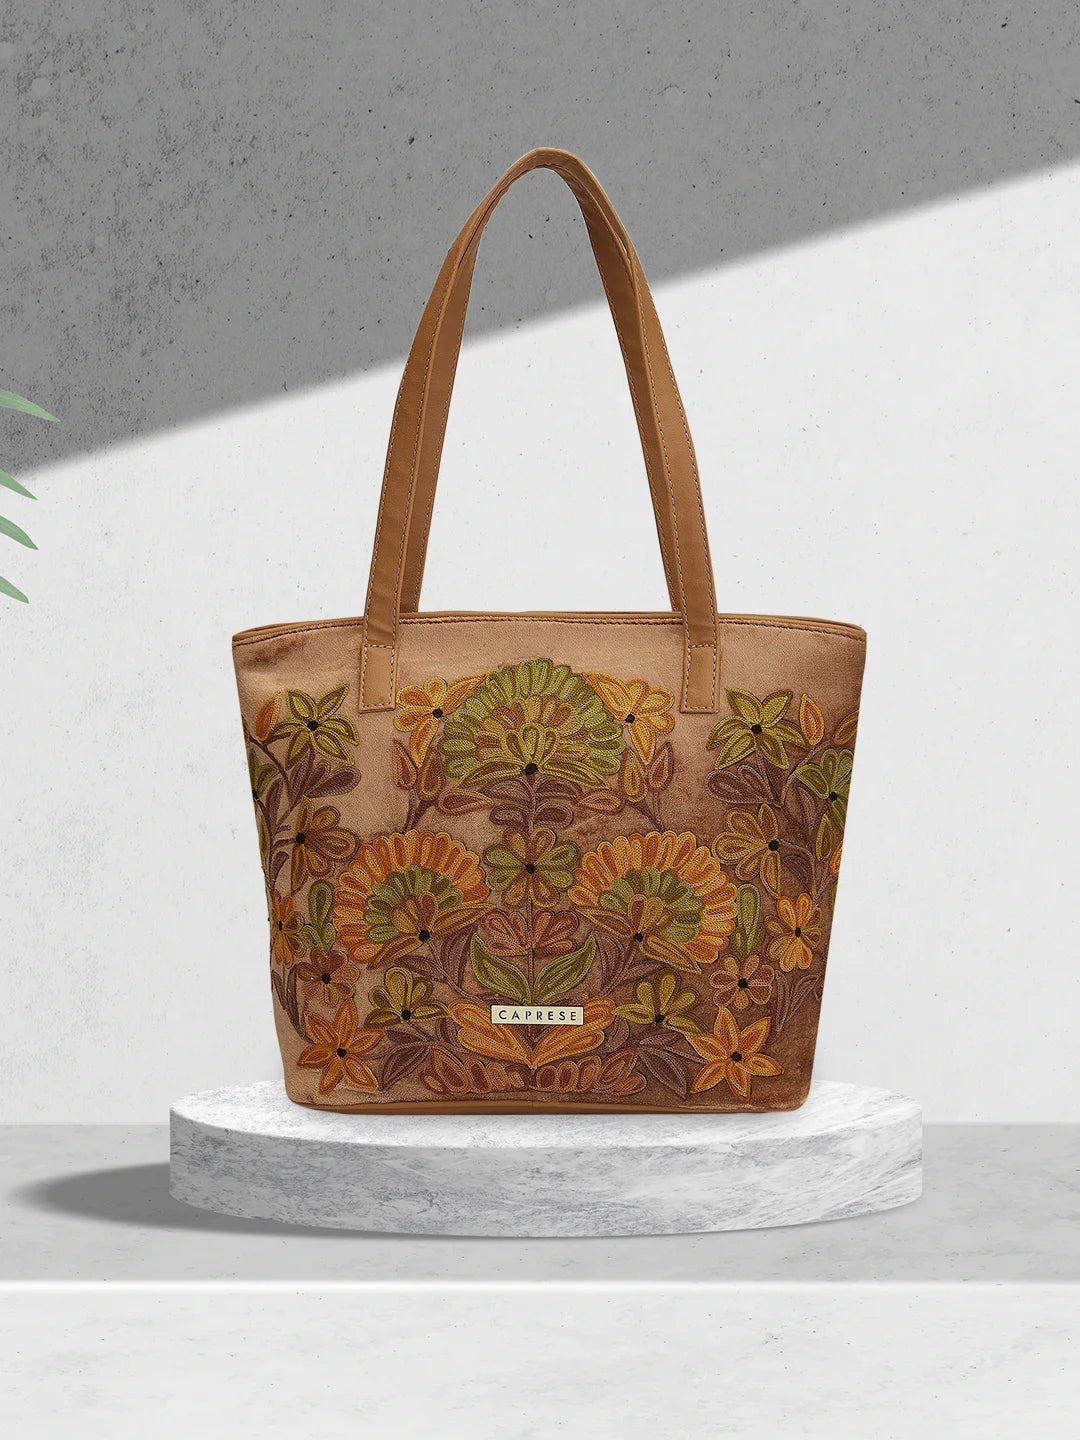 Caprese Tresna Embroidery Tote Handbag